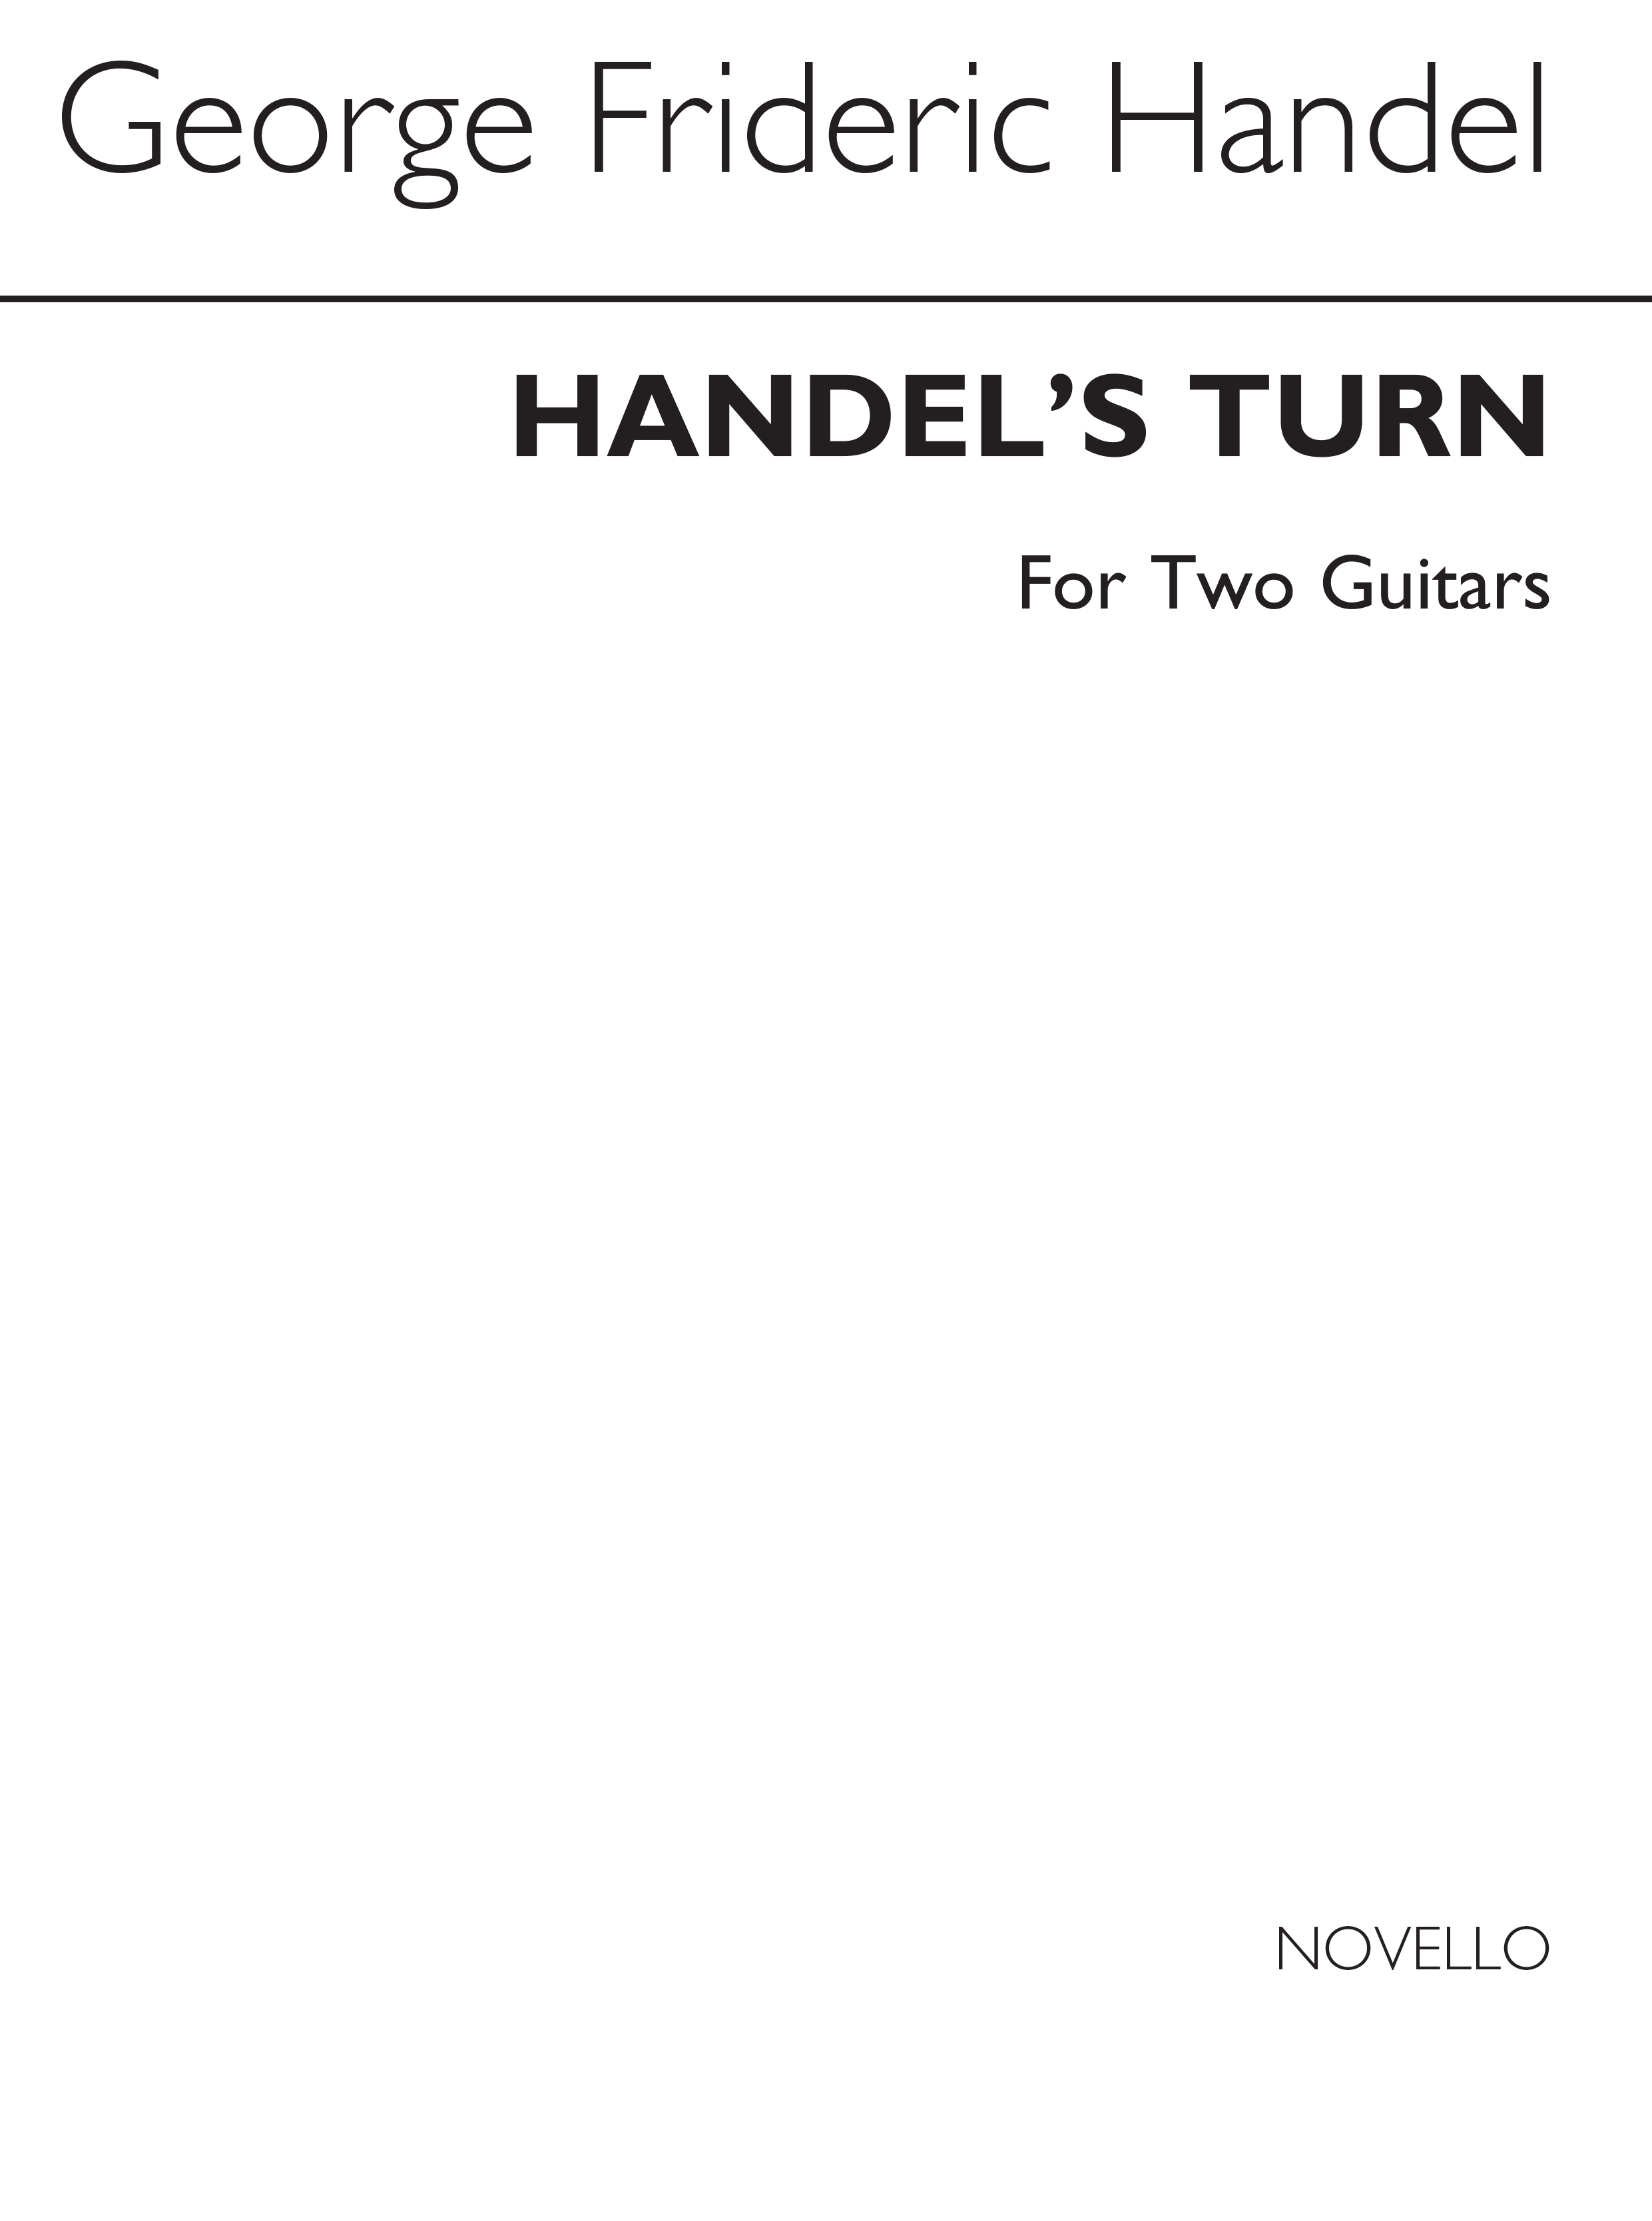 Duarte: Handel's Turn for Two Guitars